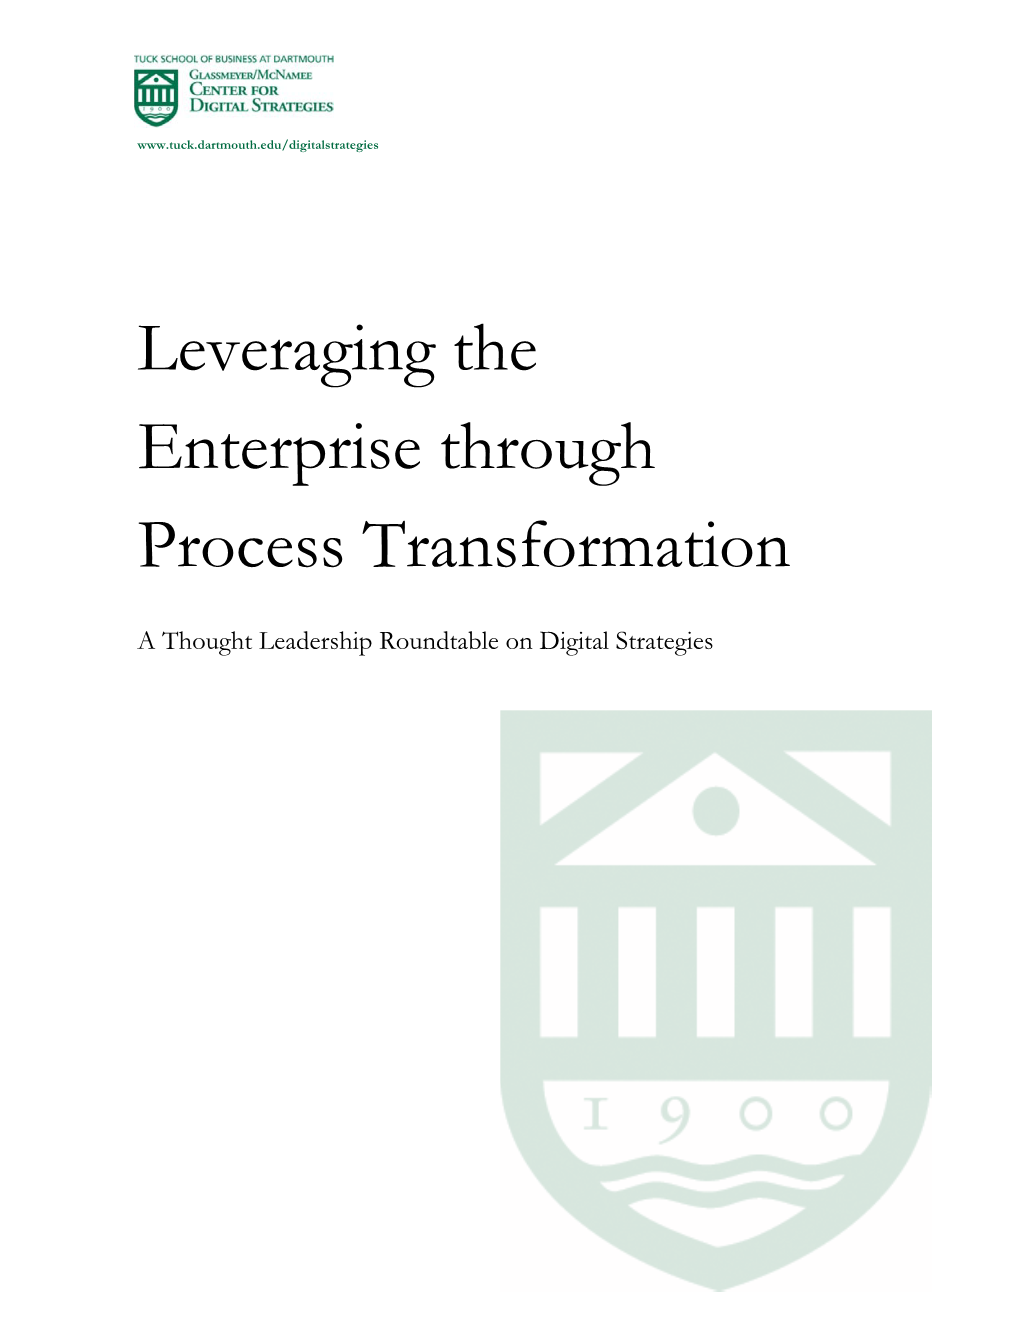 Leveraging the Enterprise Through Process Transformation